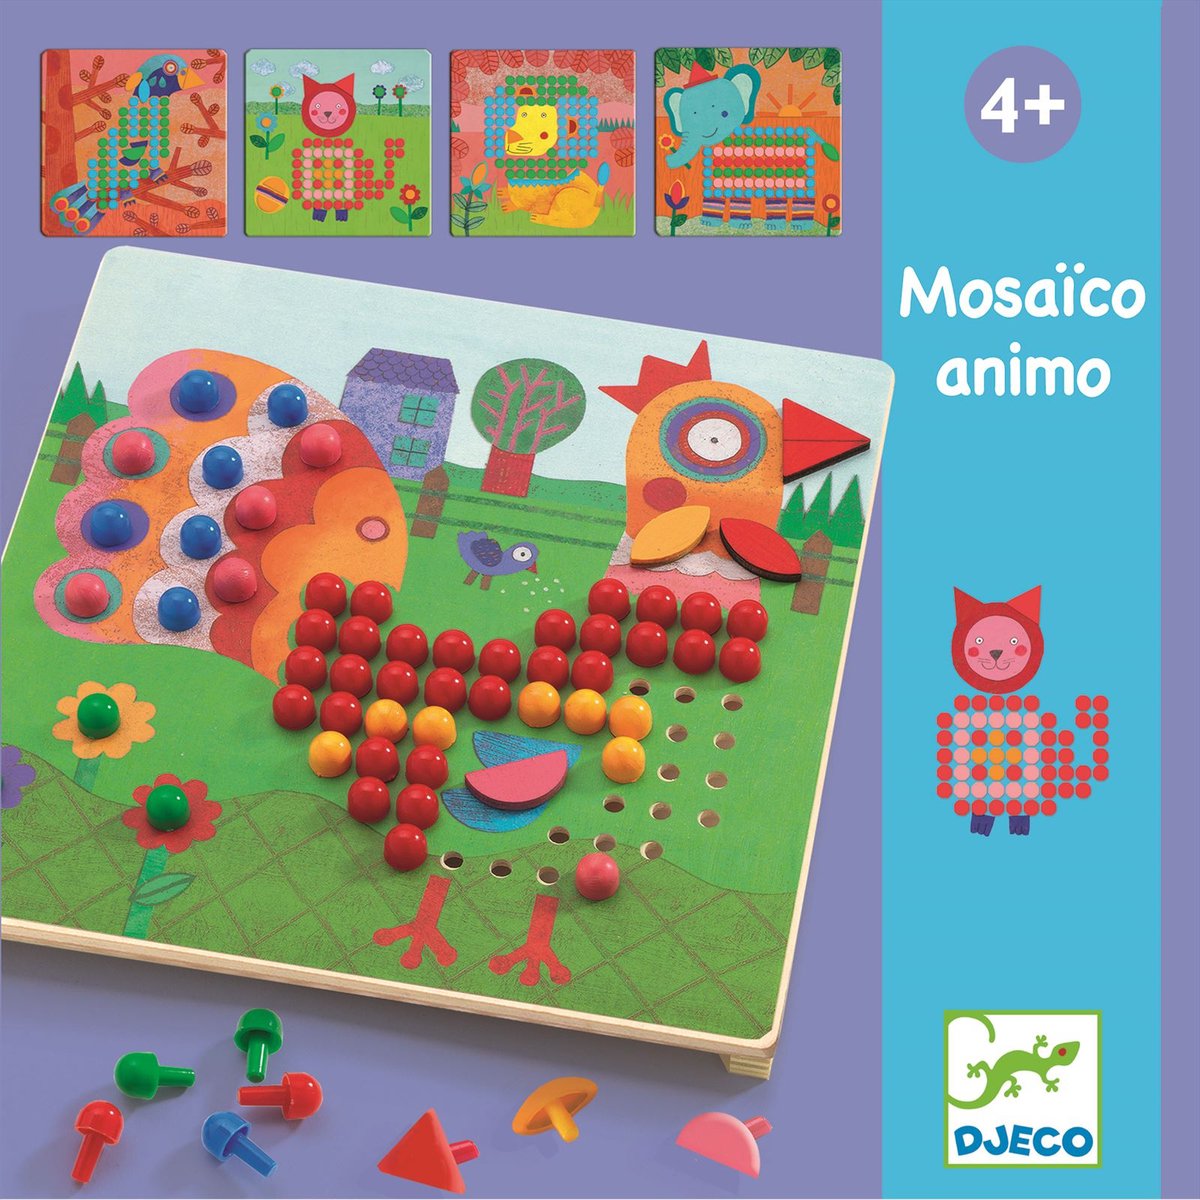 Djeco - Mosaico Animo - 3+